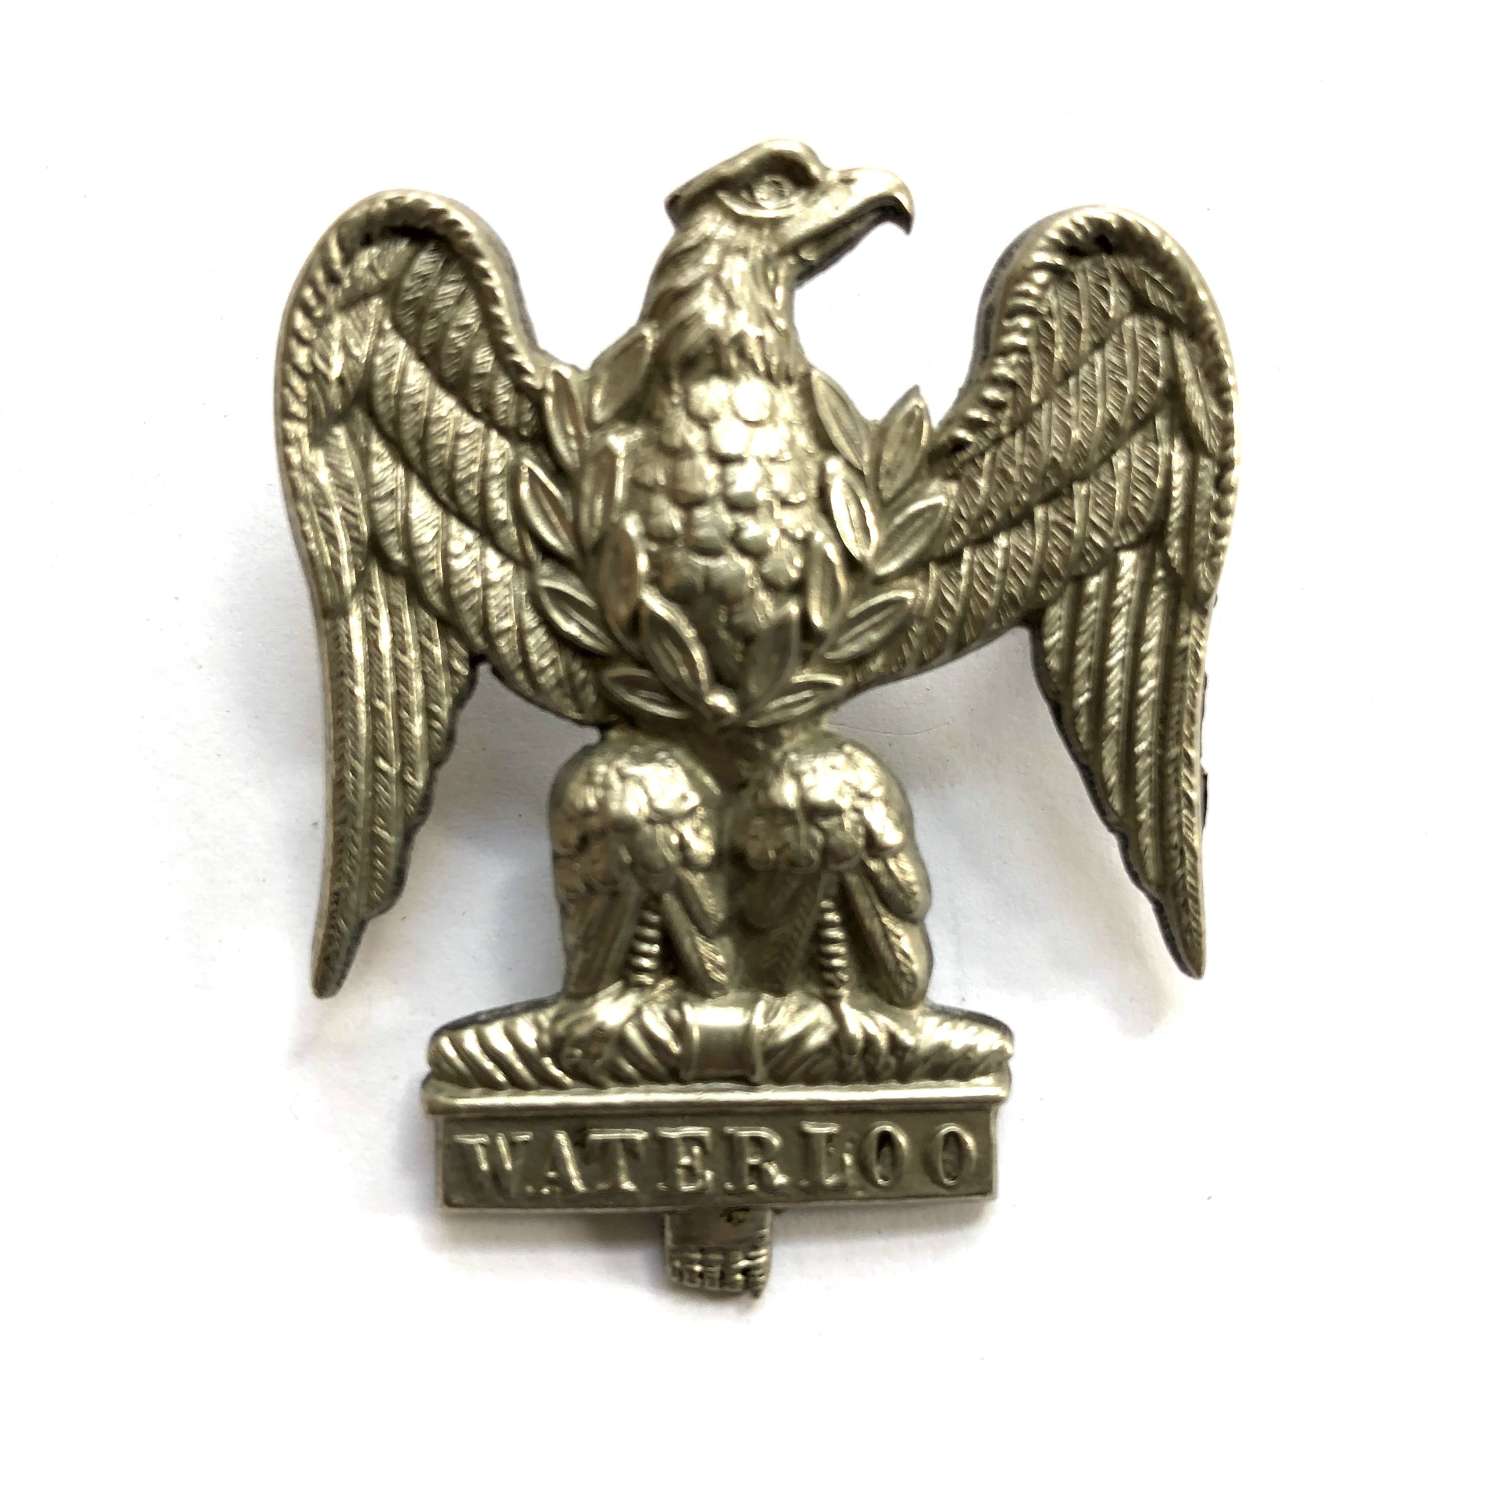 Royal Scots Greys NCO’s arm badge